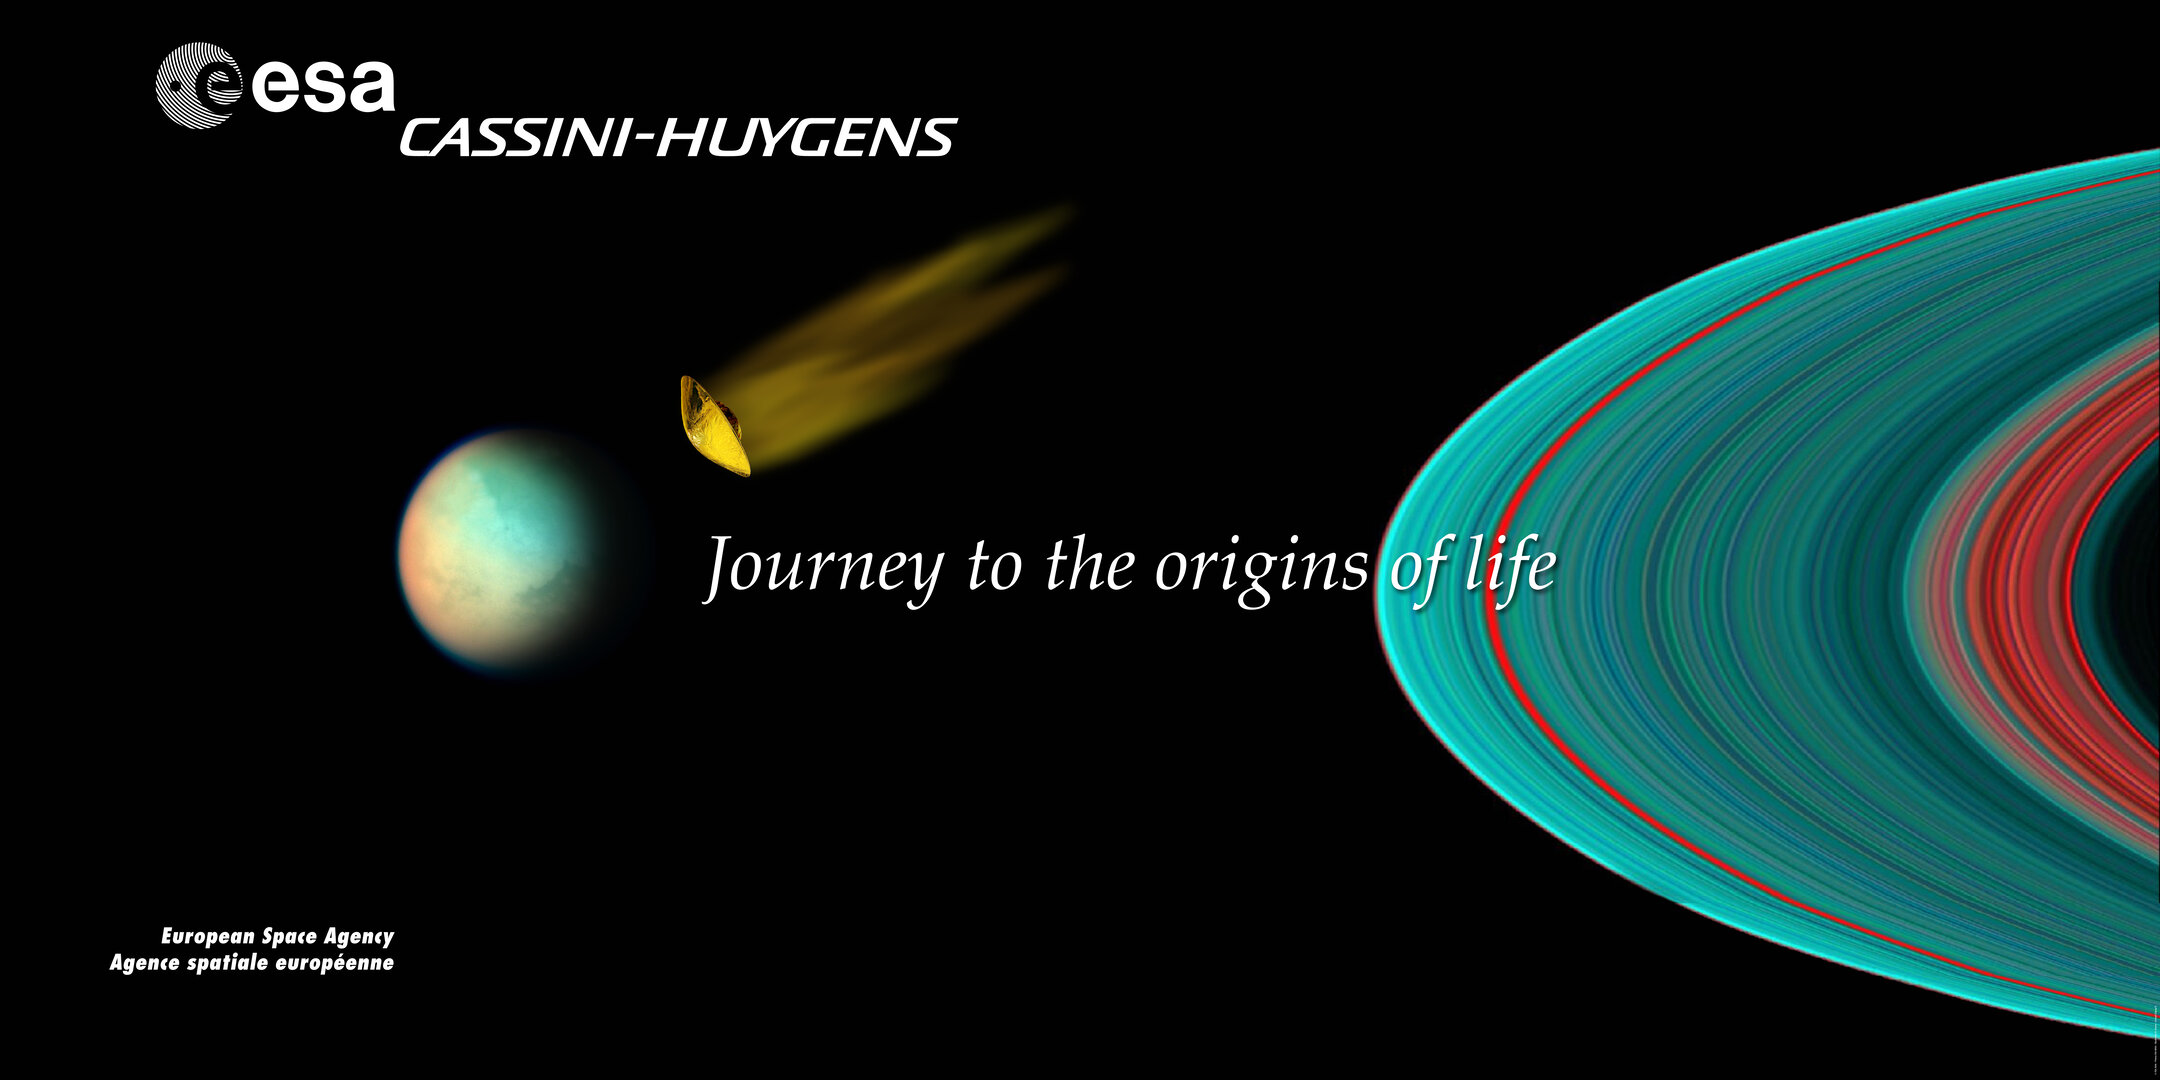 Cassini-Huygens journey to the origins of life